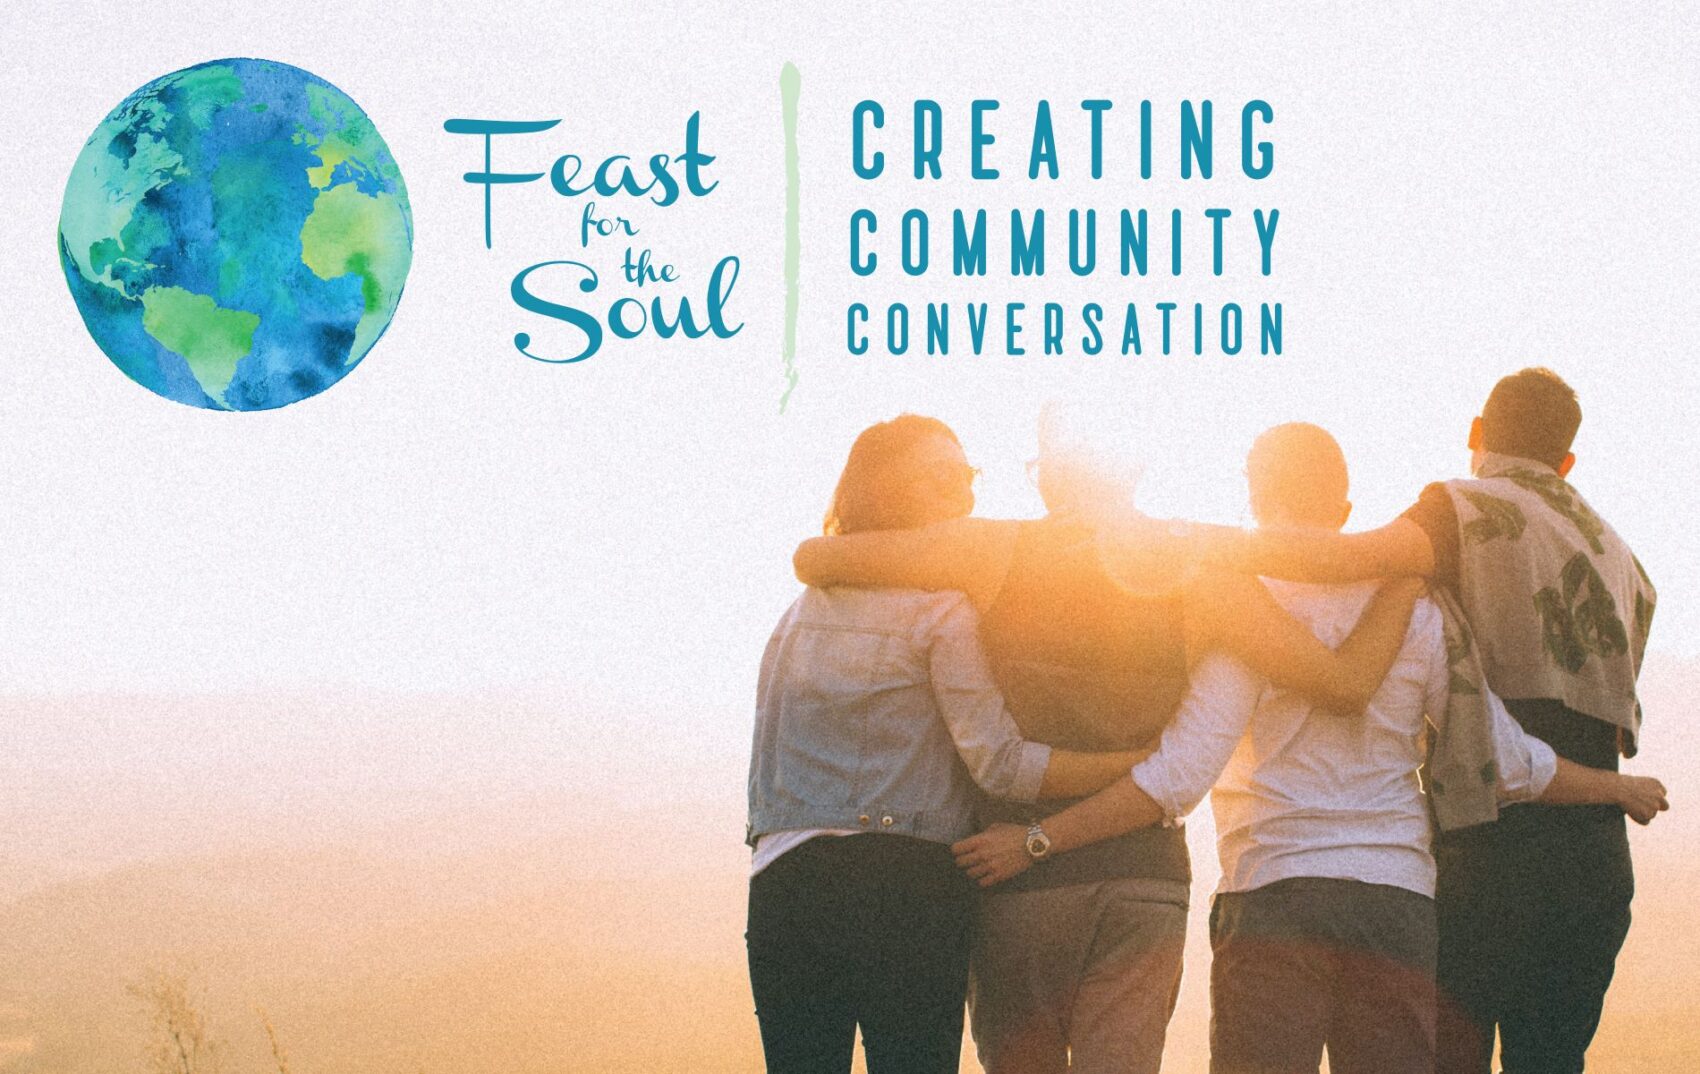 Cocreating Compassionate Community